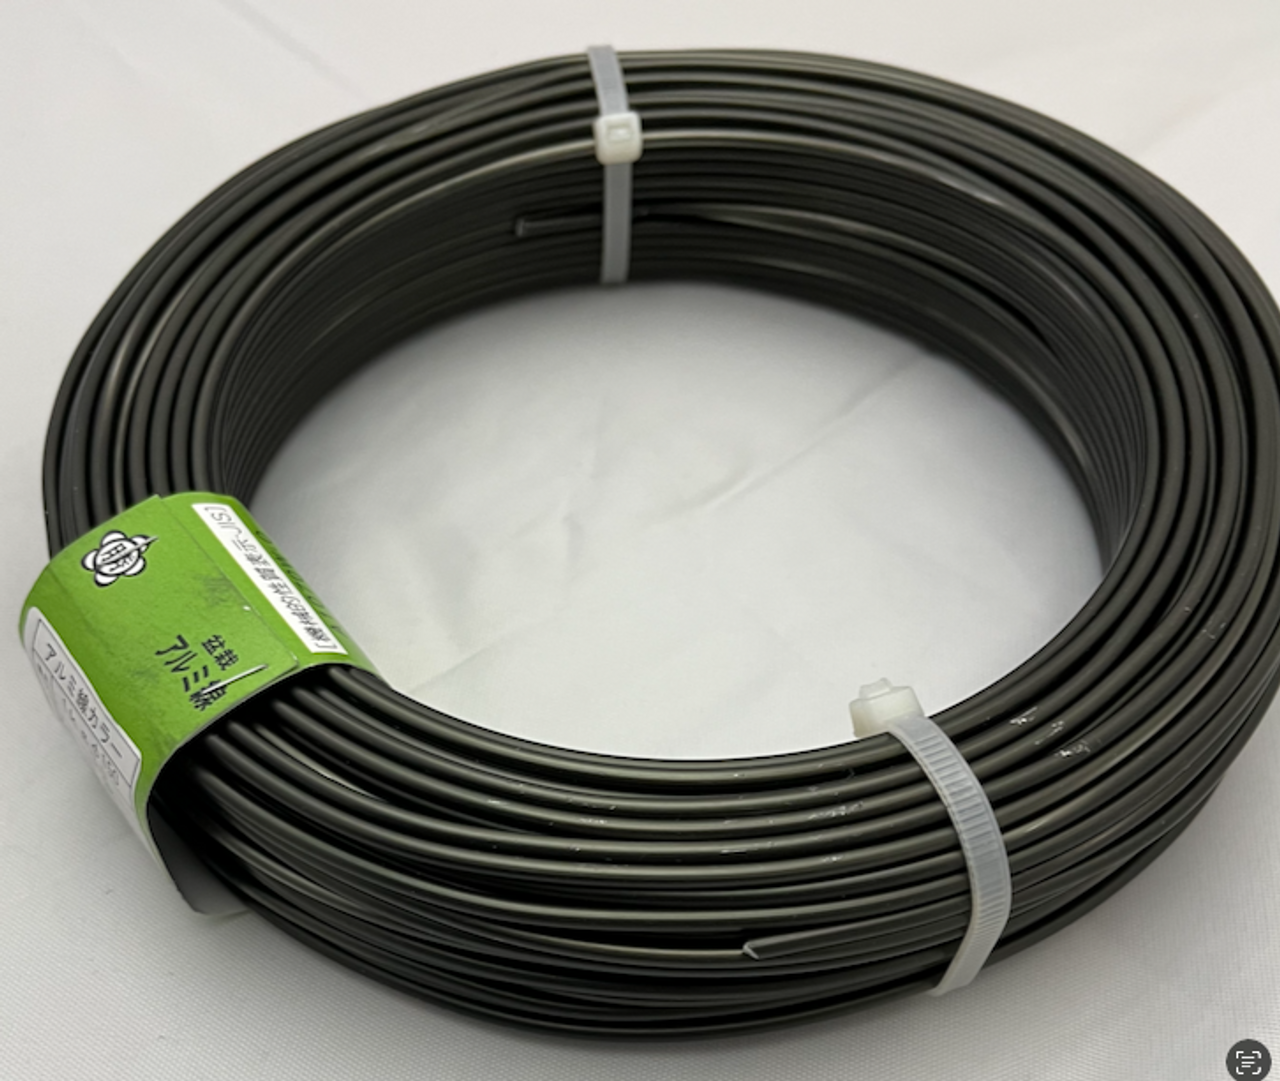 Bonsai Wire: 3.0 mm Dia., 52 Meters, Anodized Aluminum